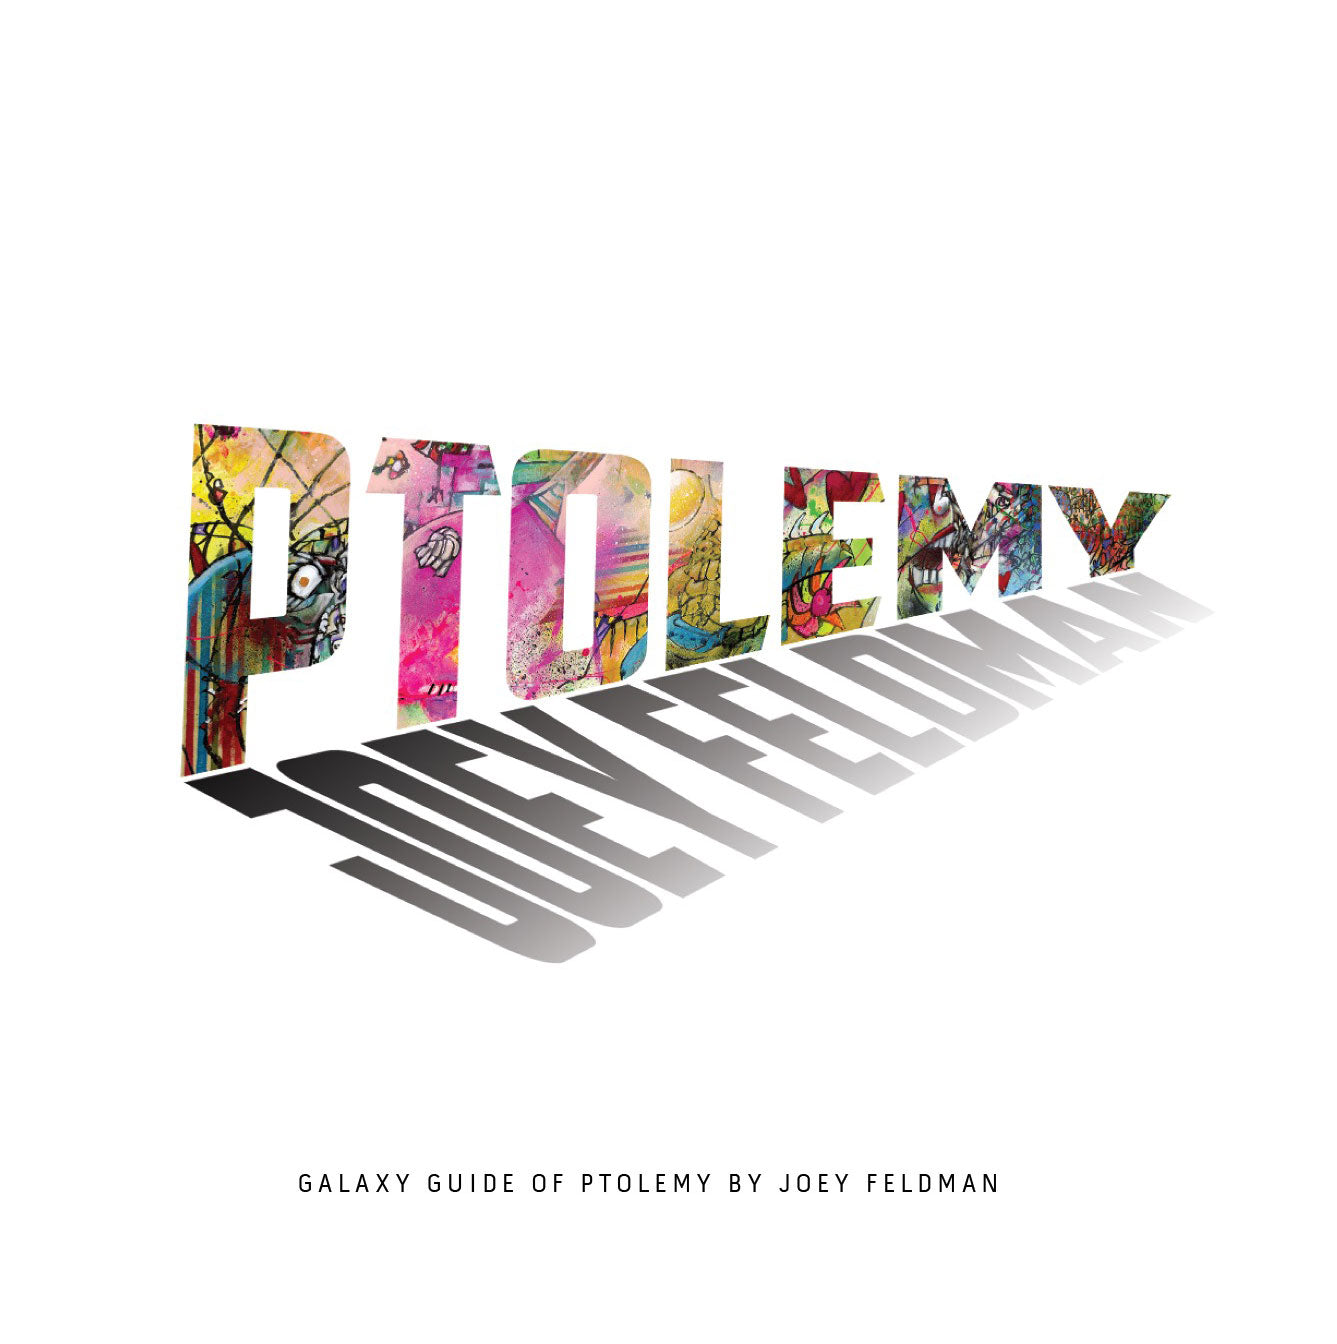 Joey Feldman "Galaxy Guide of PTOLEMY" Hardcover Book